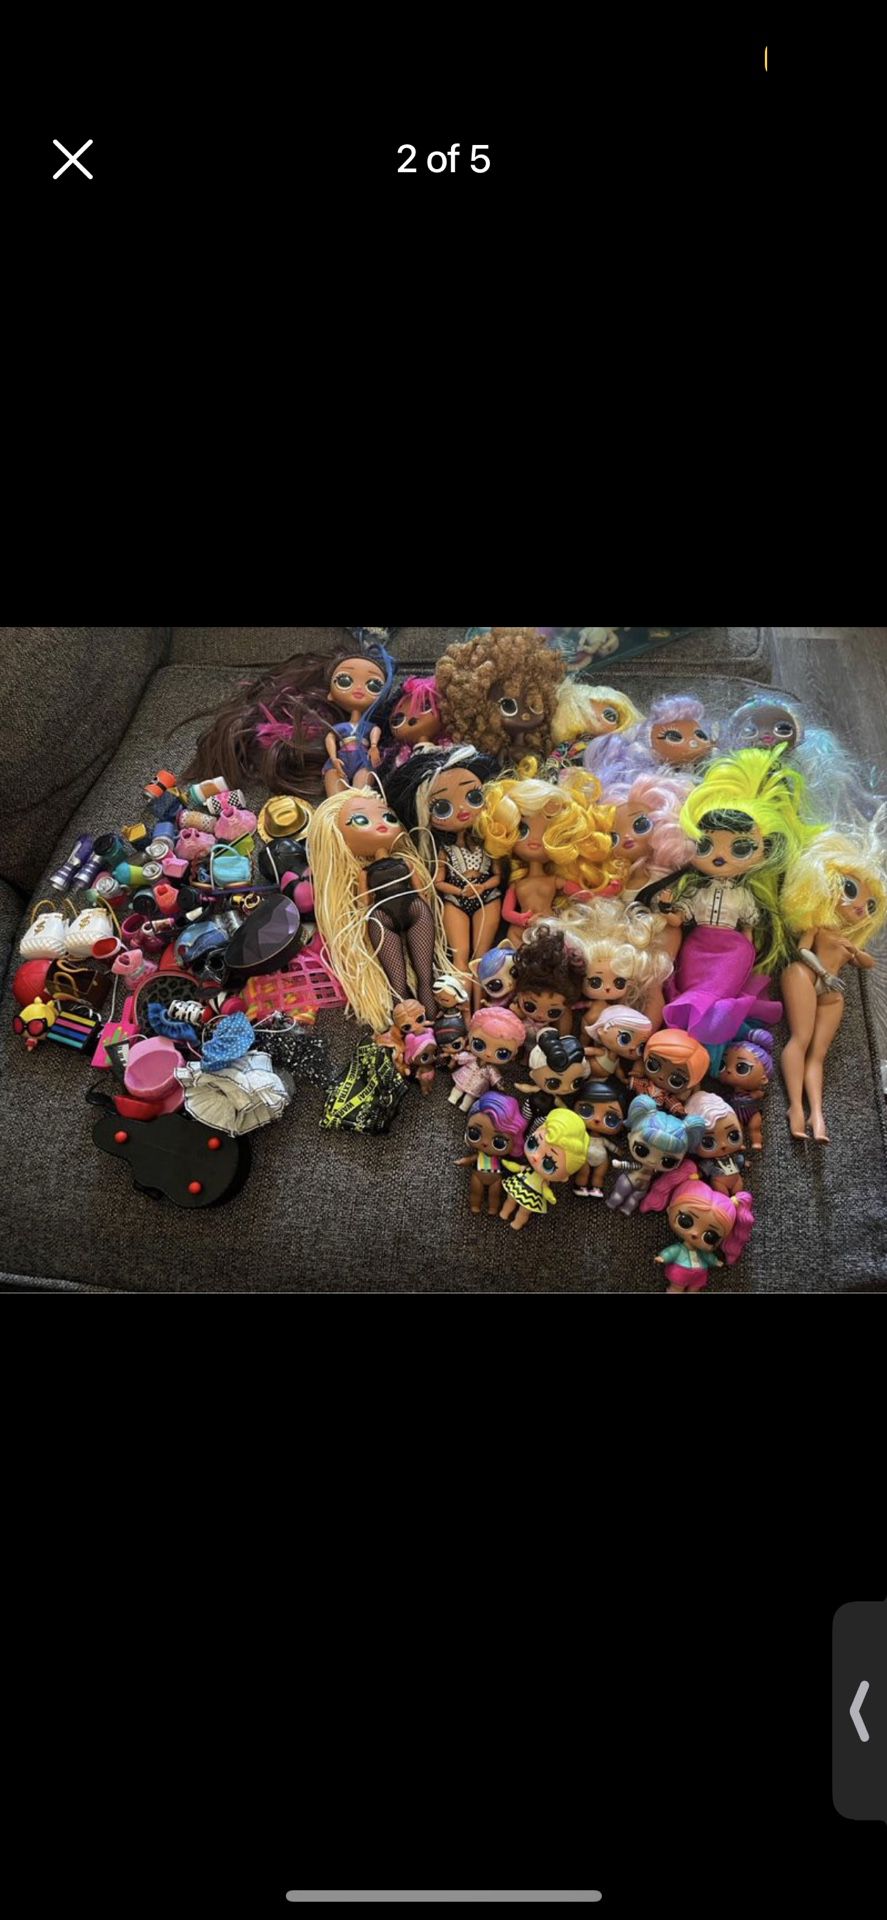 Dolls bundle 12 big dolls ,18 little dolls & Accessories all for $70